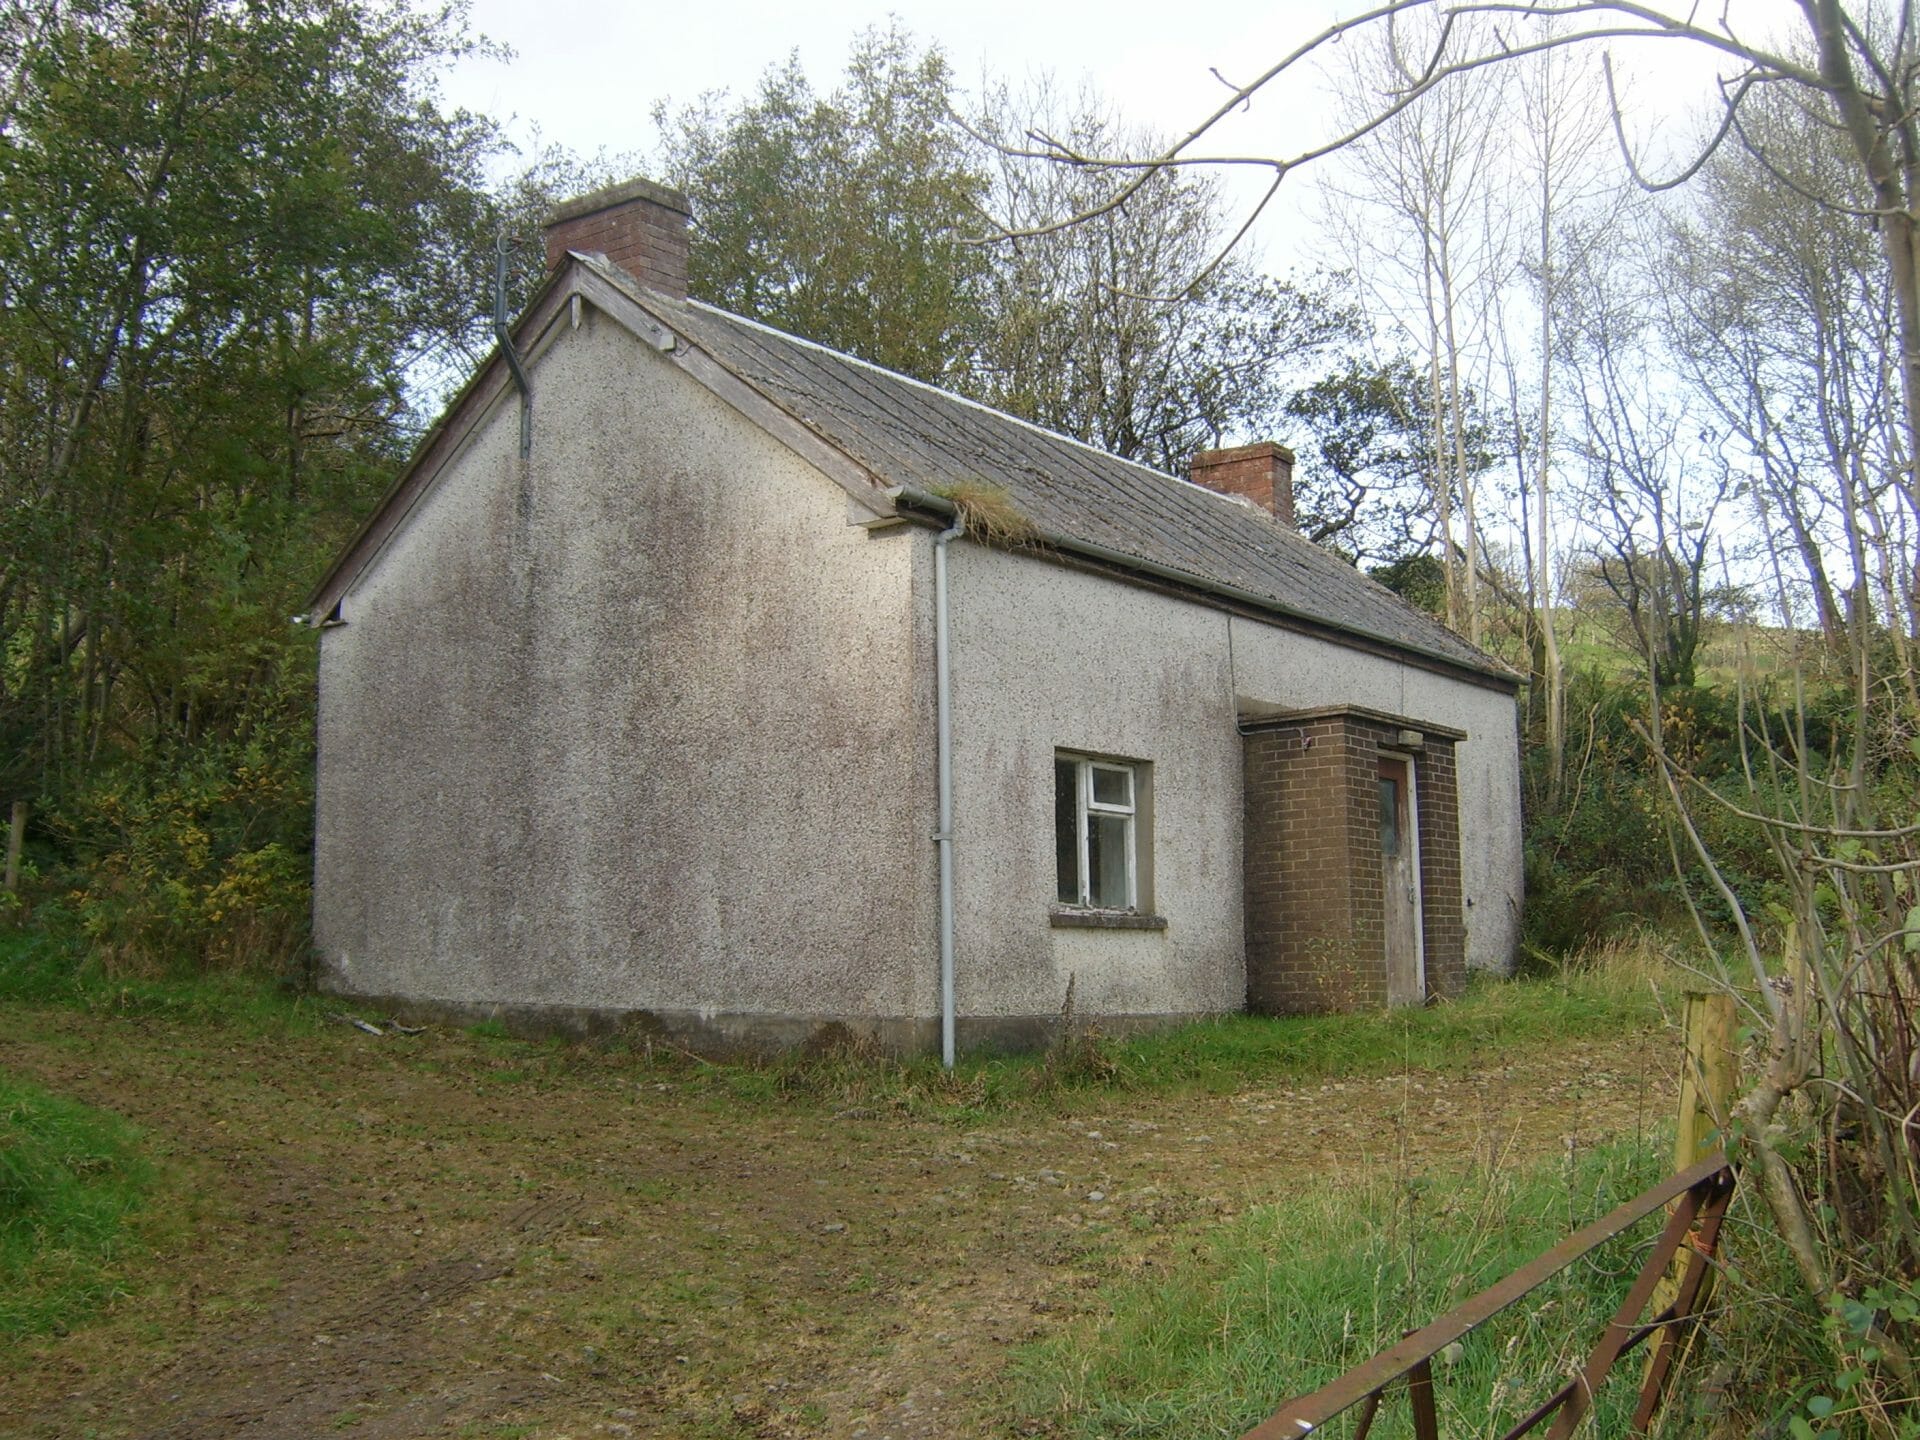 John (Francis) Bradley's house